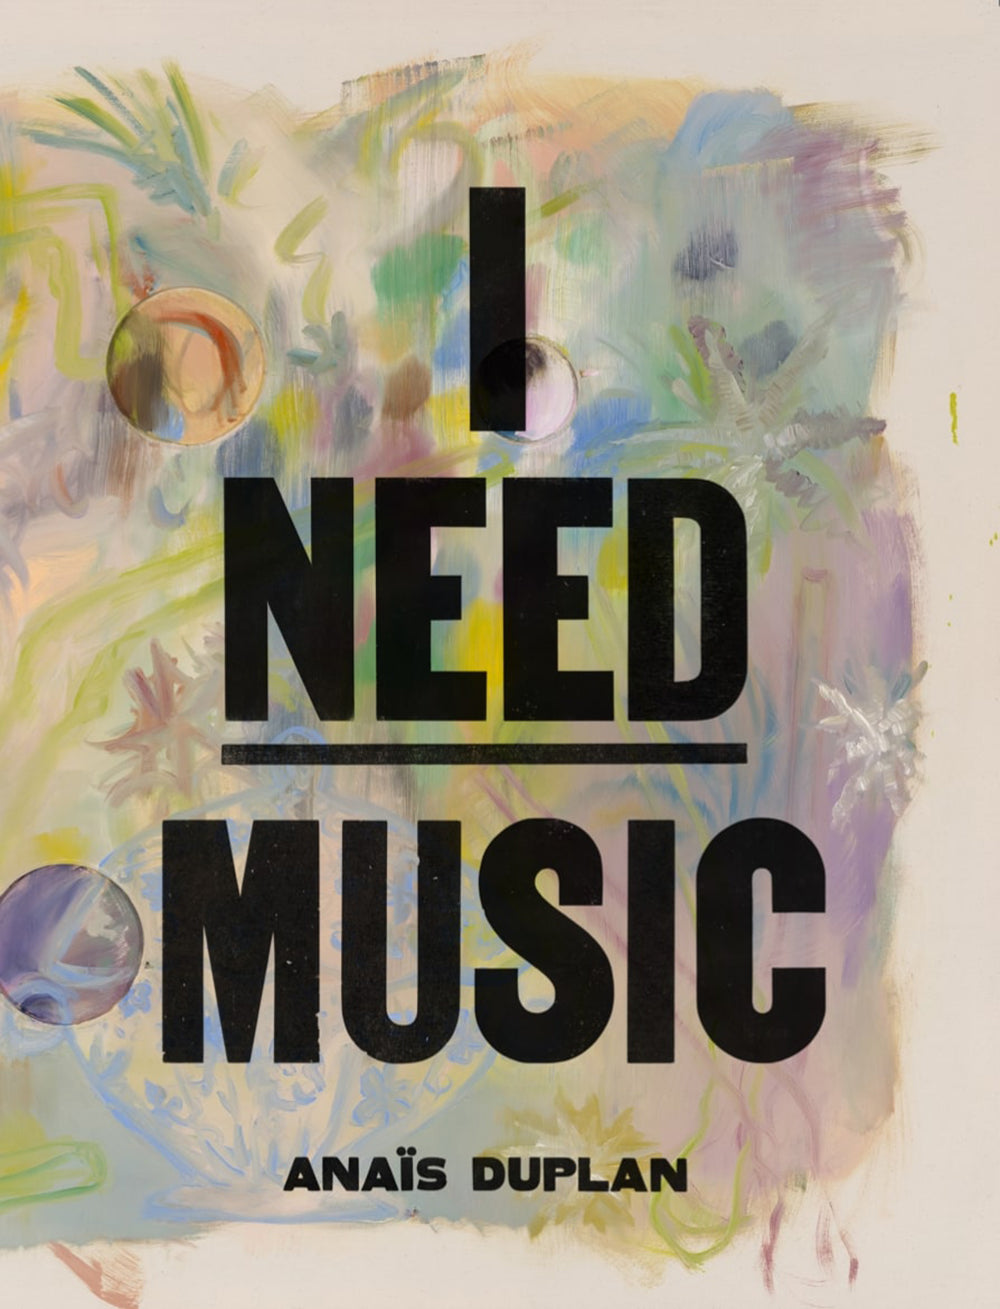 I NEED MUSIC